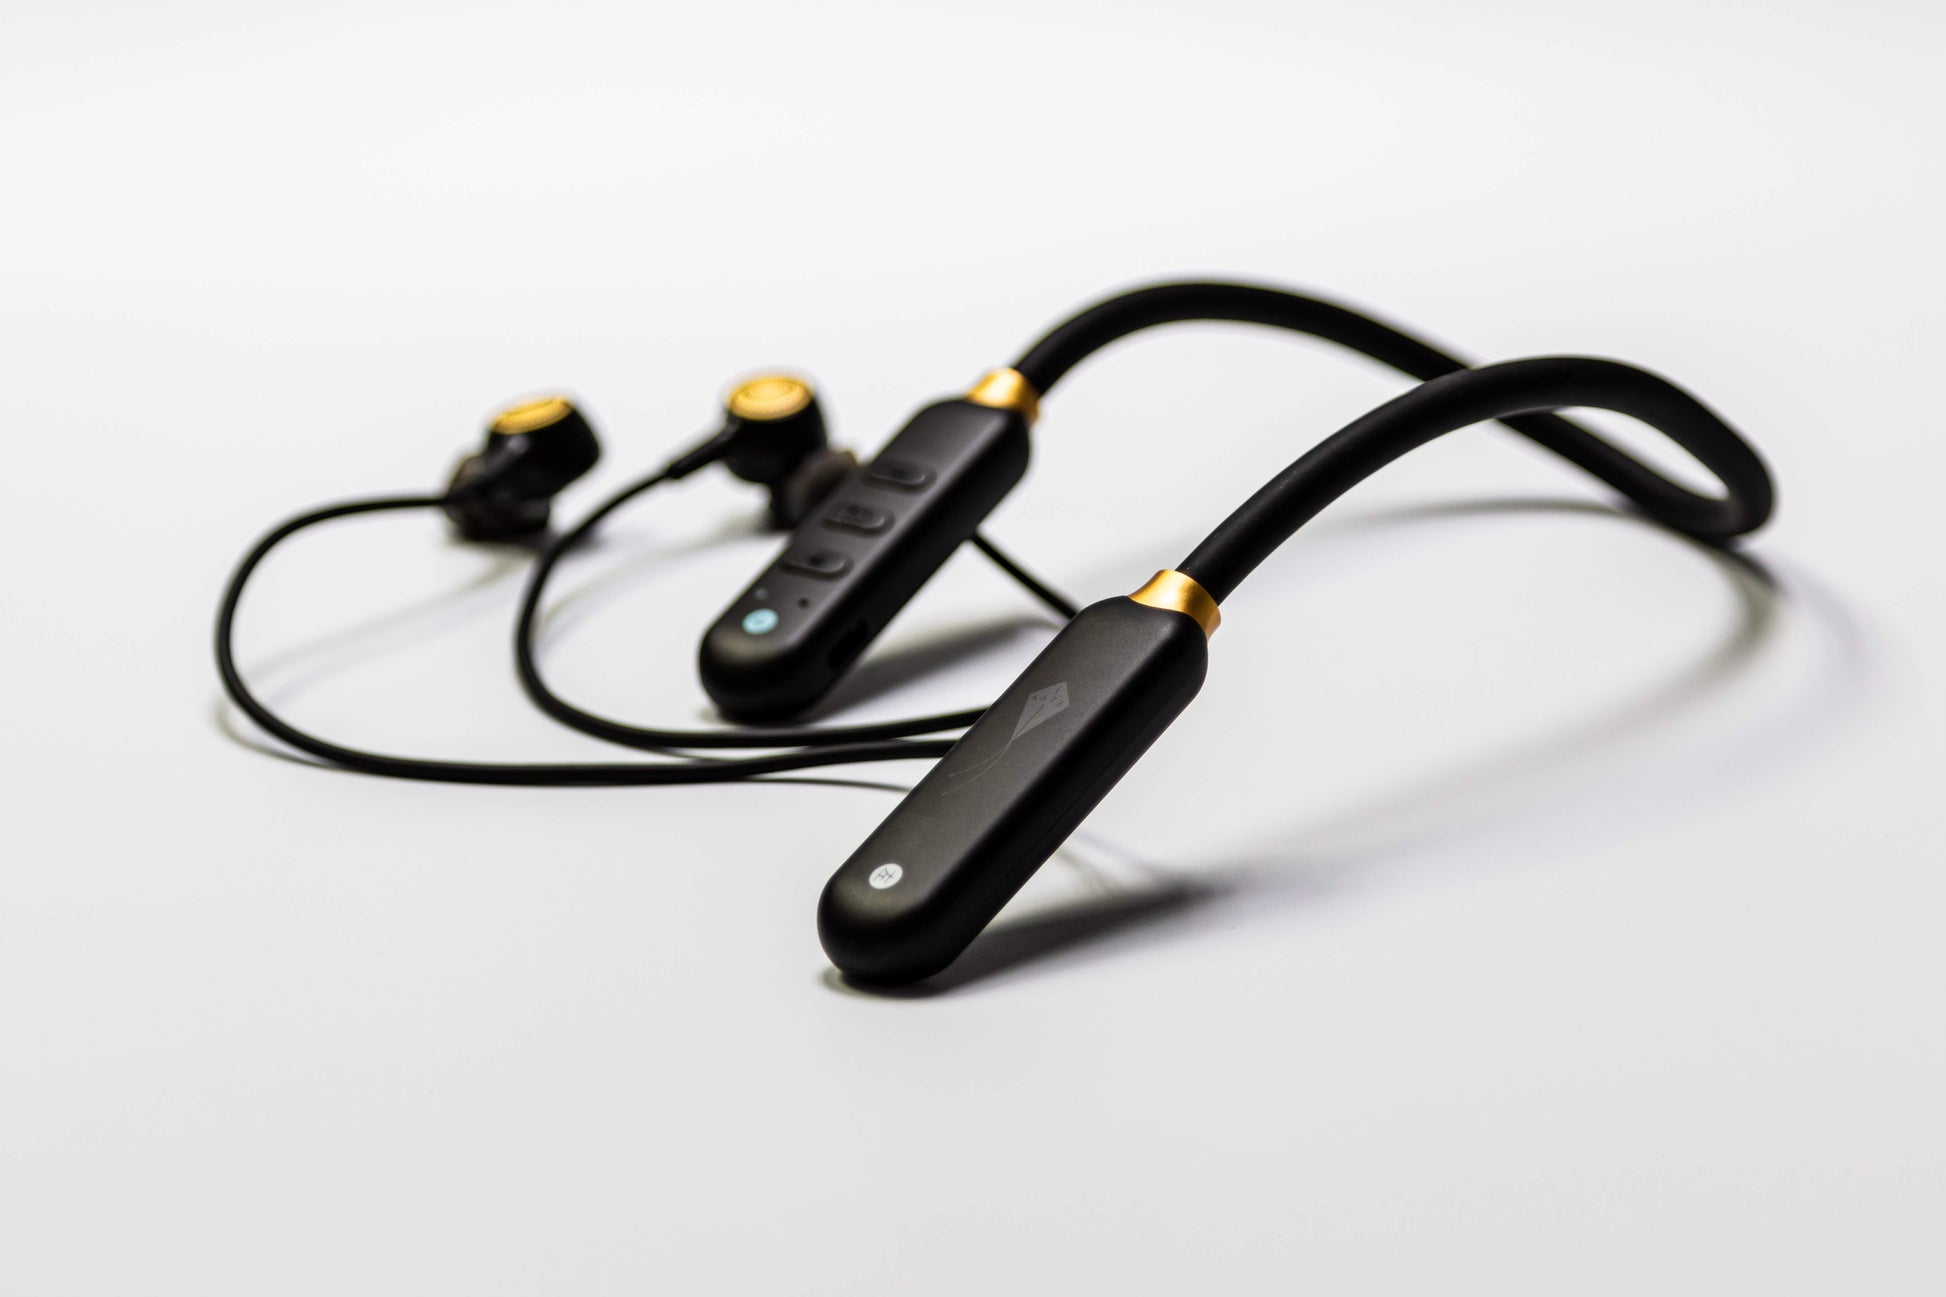 Kite smart sound amplifier with flexible neckband design